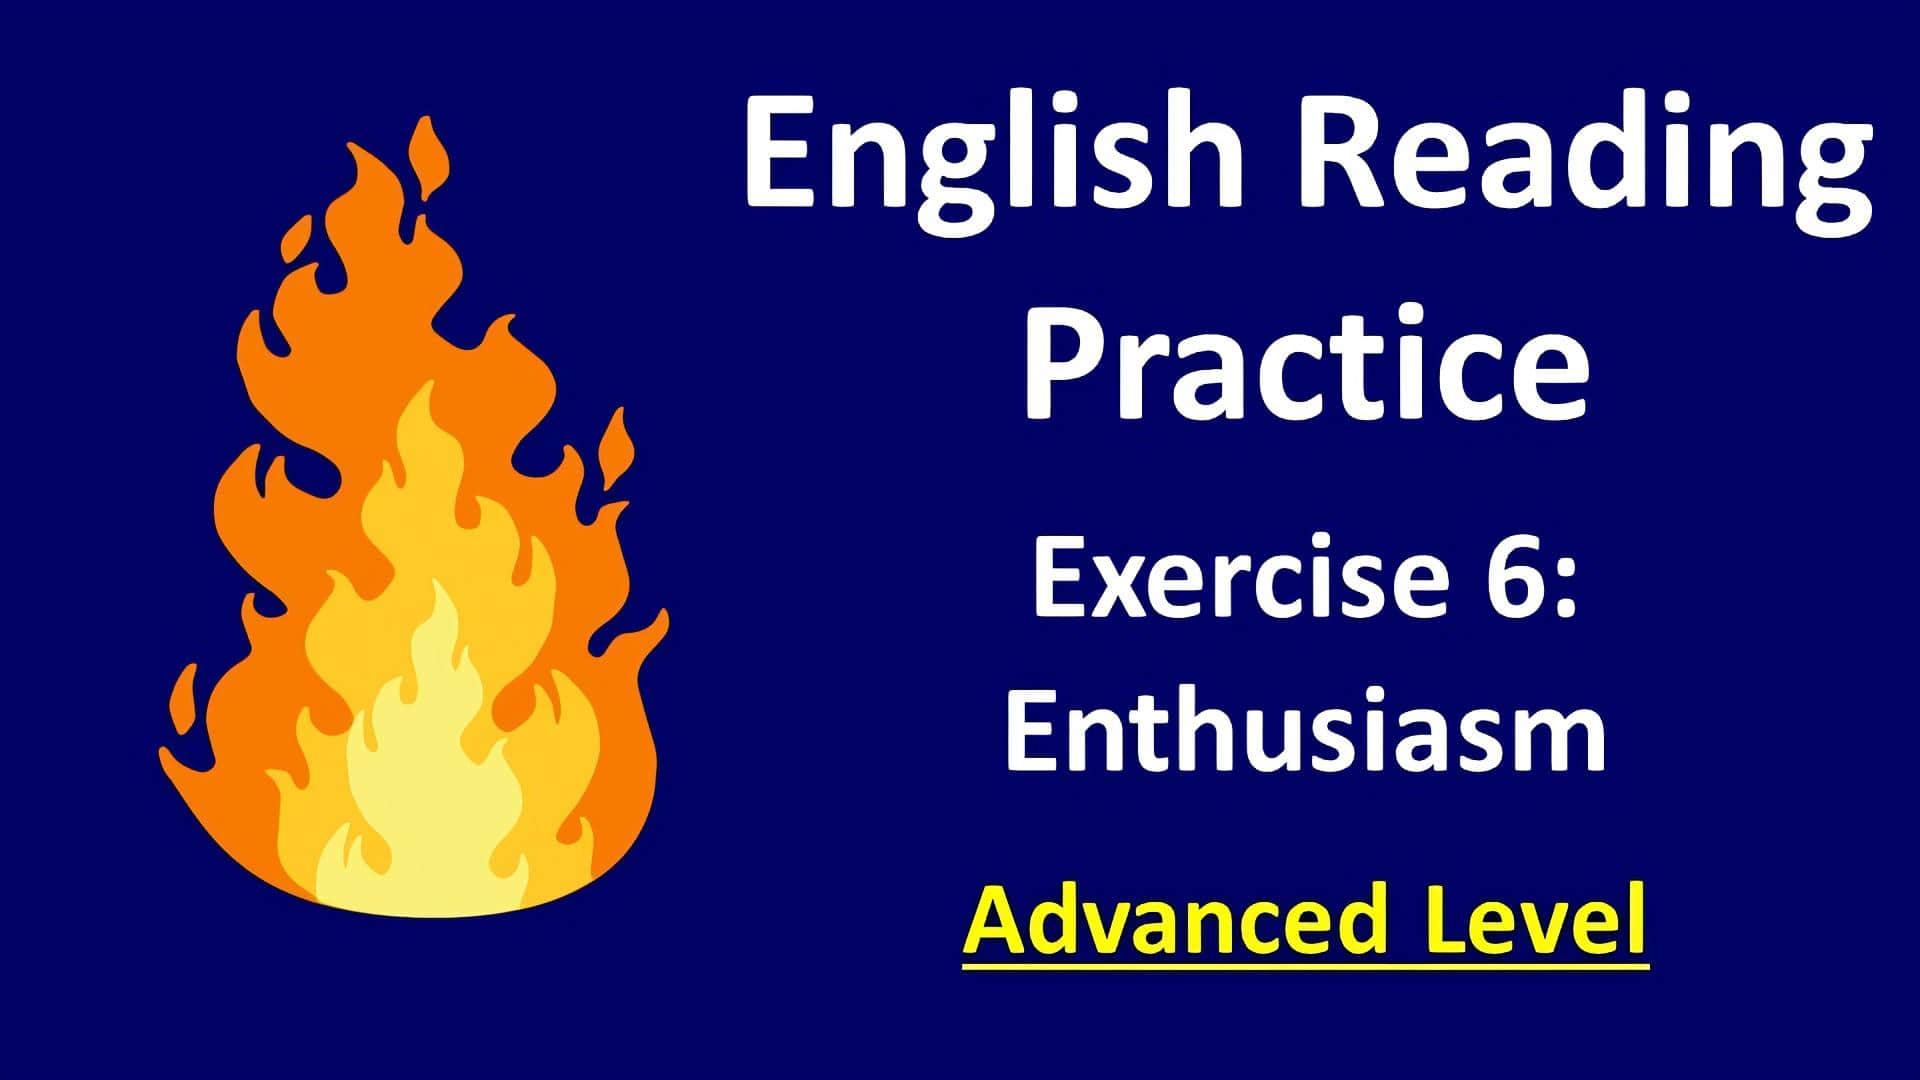 english reading exercise - 6A Enthusiasm